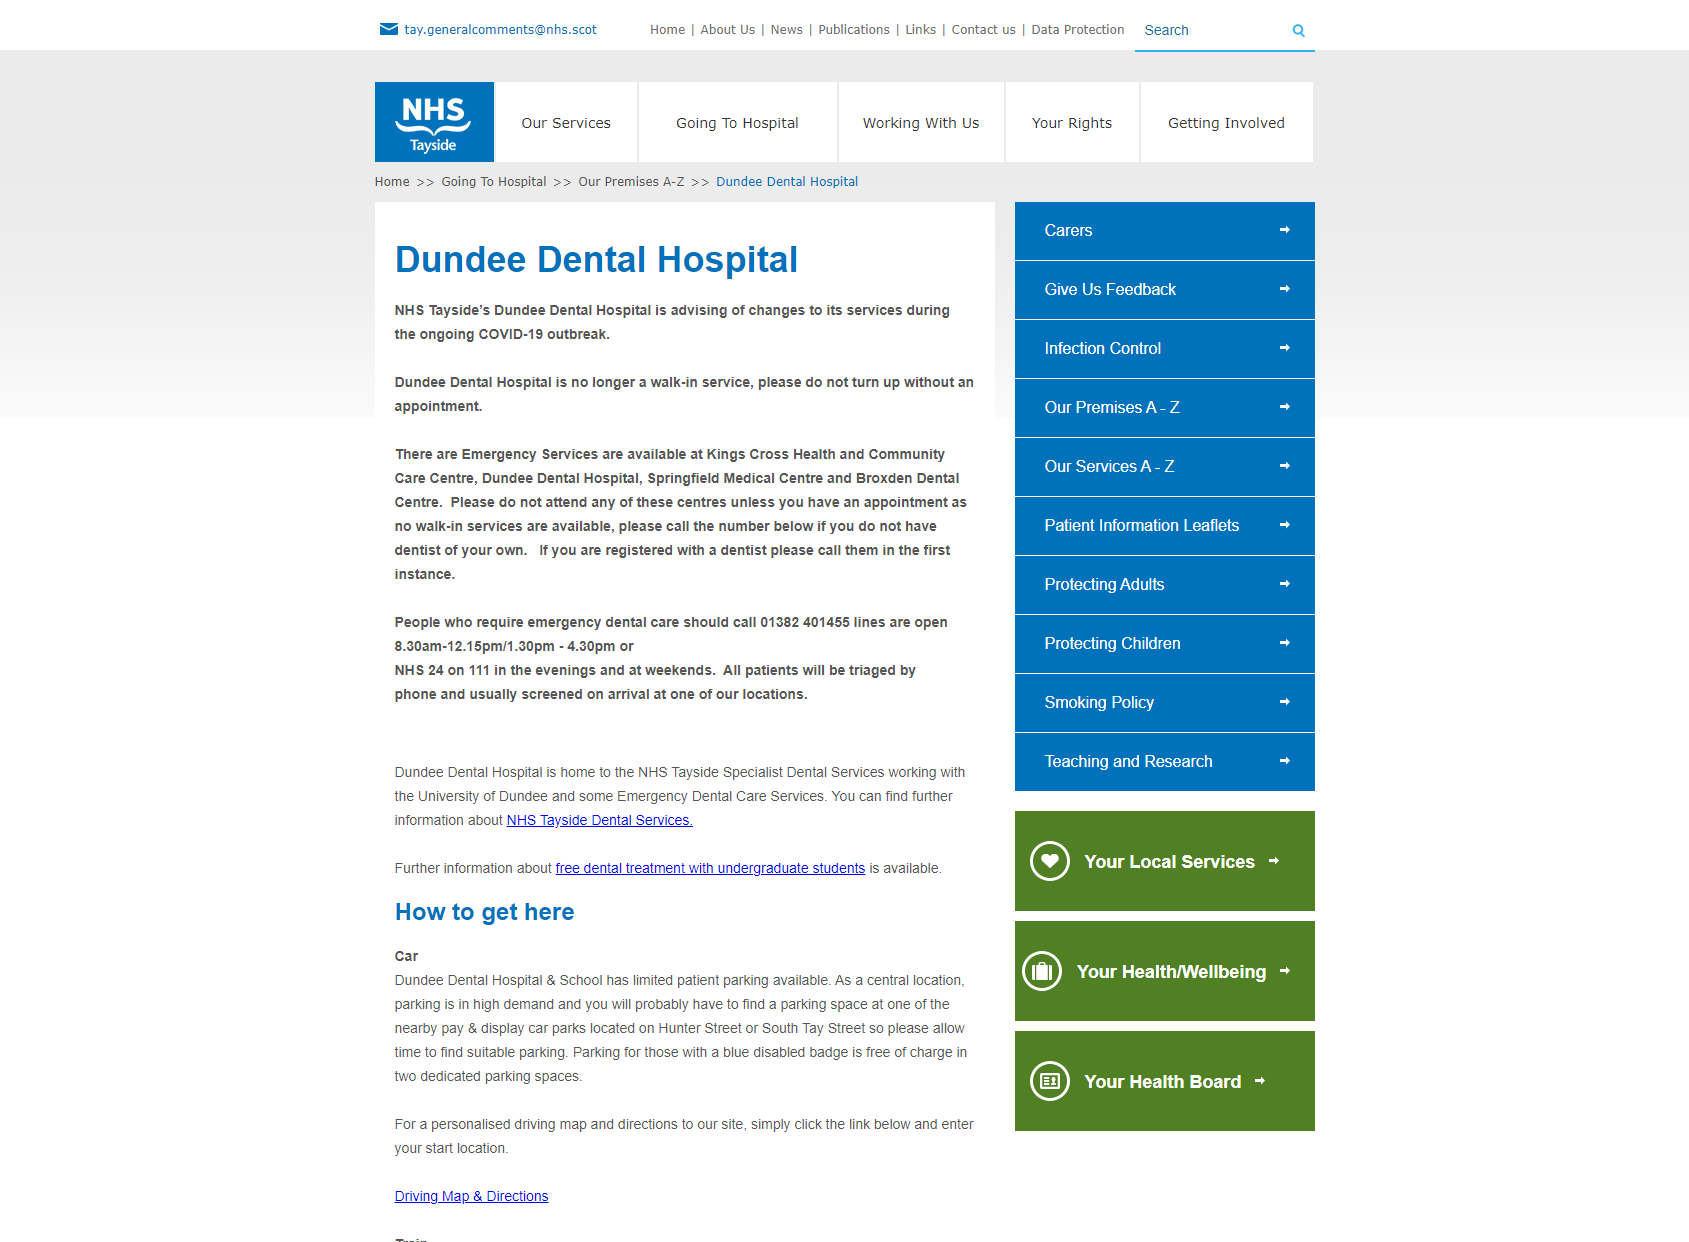 Dundee Dental Hospital & School